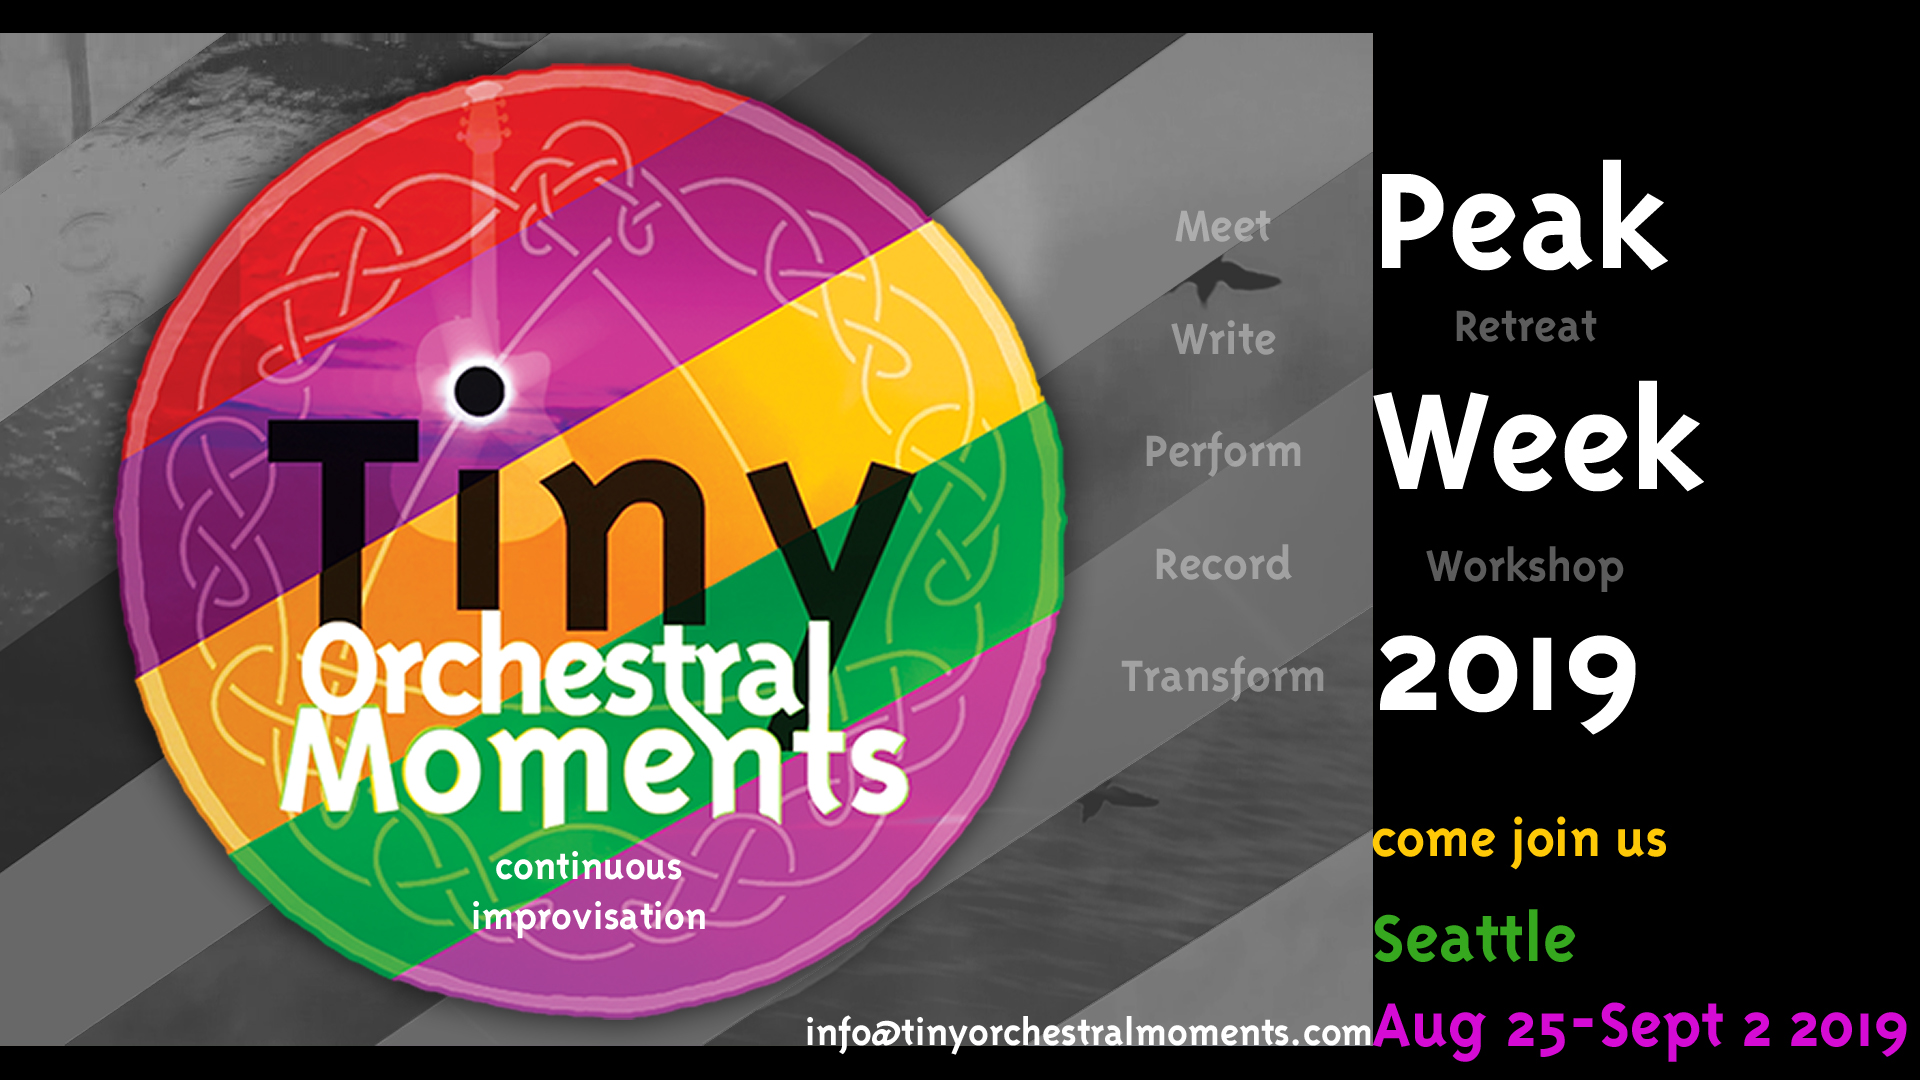 Tiny Orchestral Moments Workshop: Peak Week IV